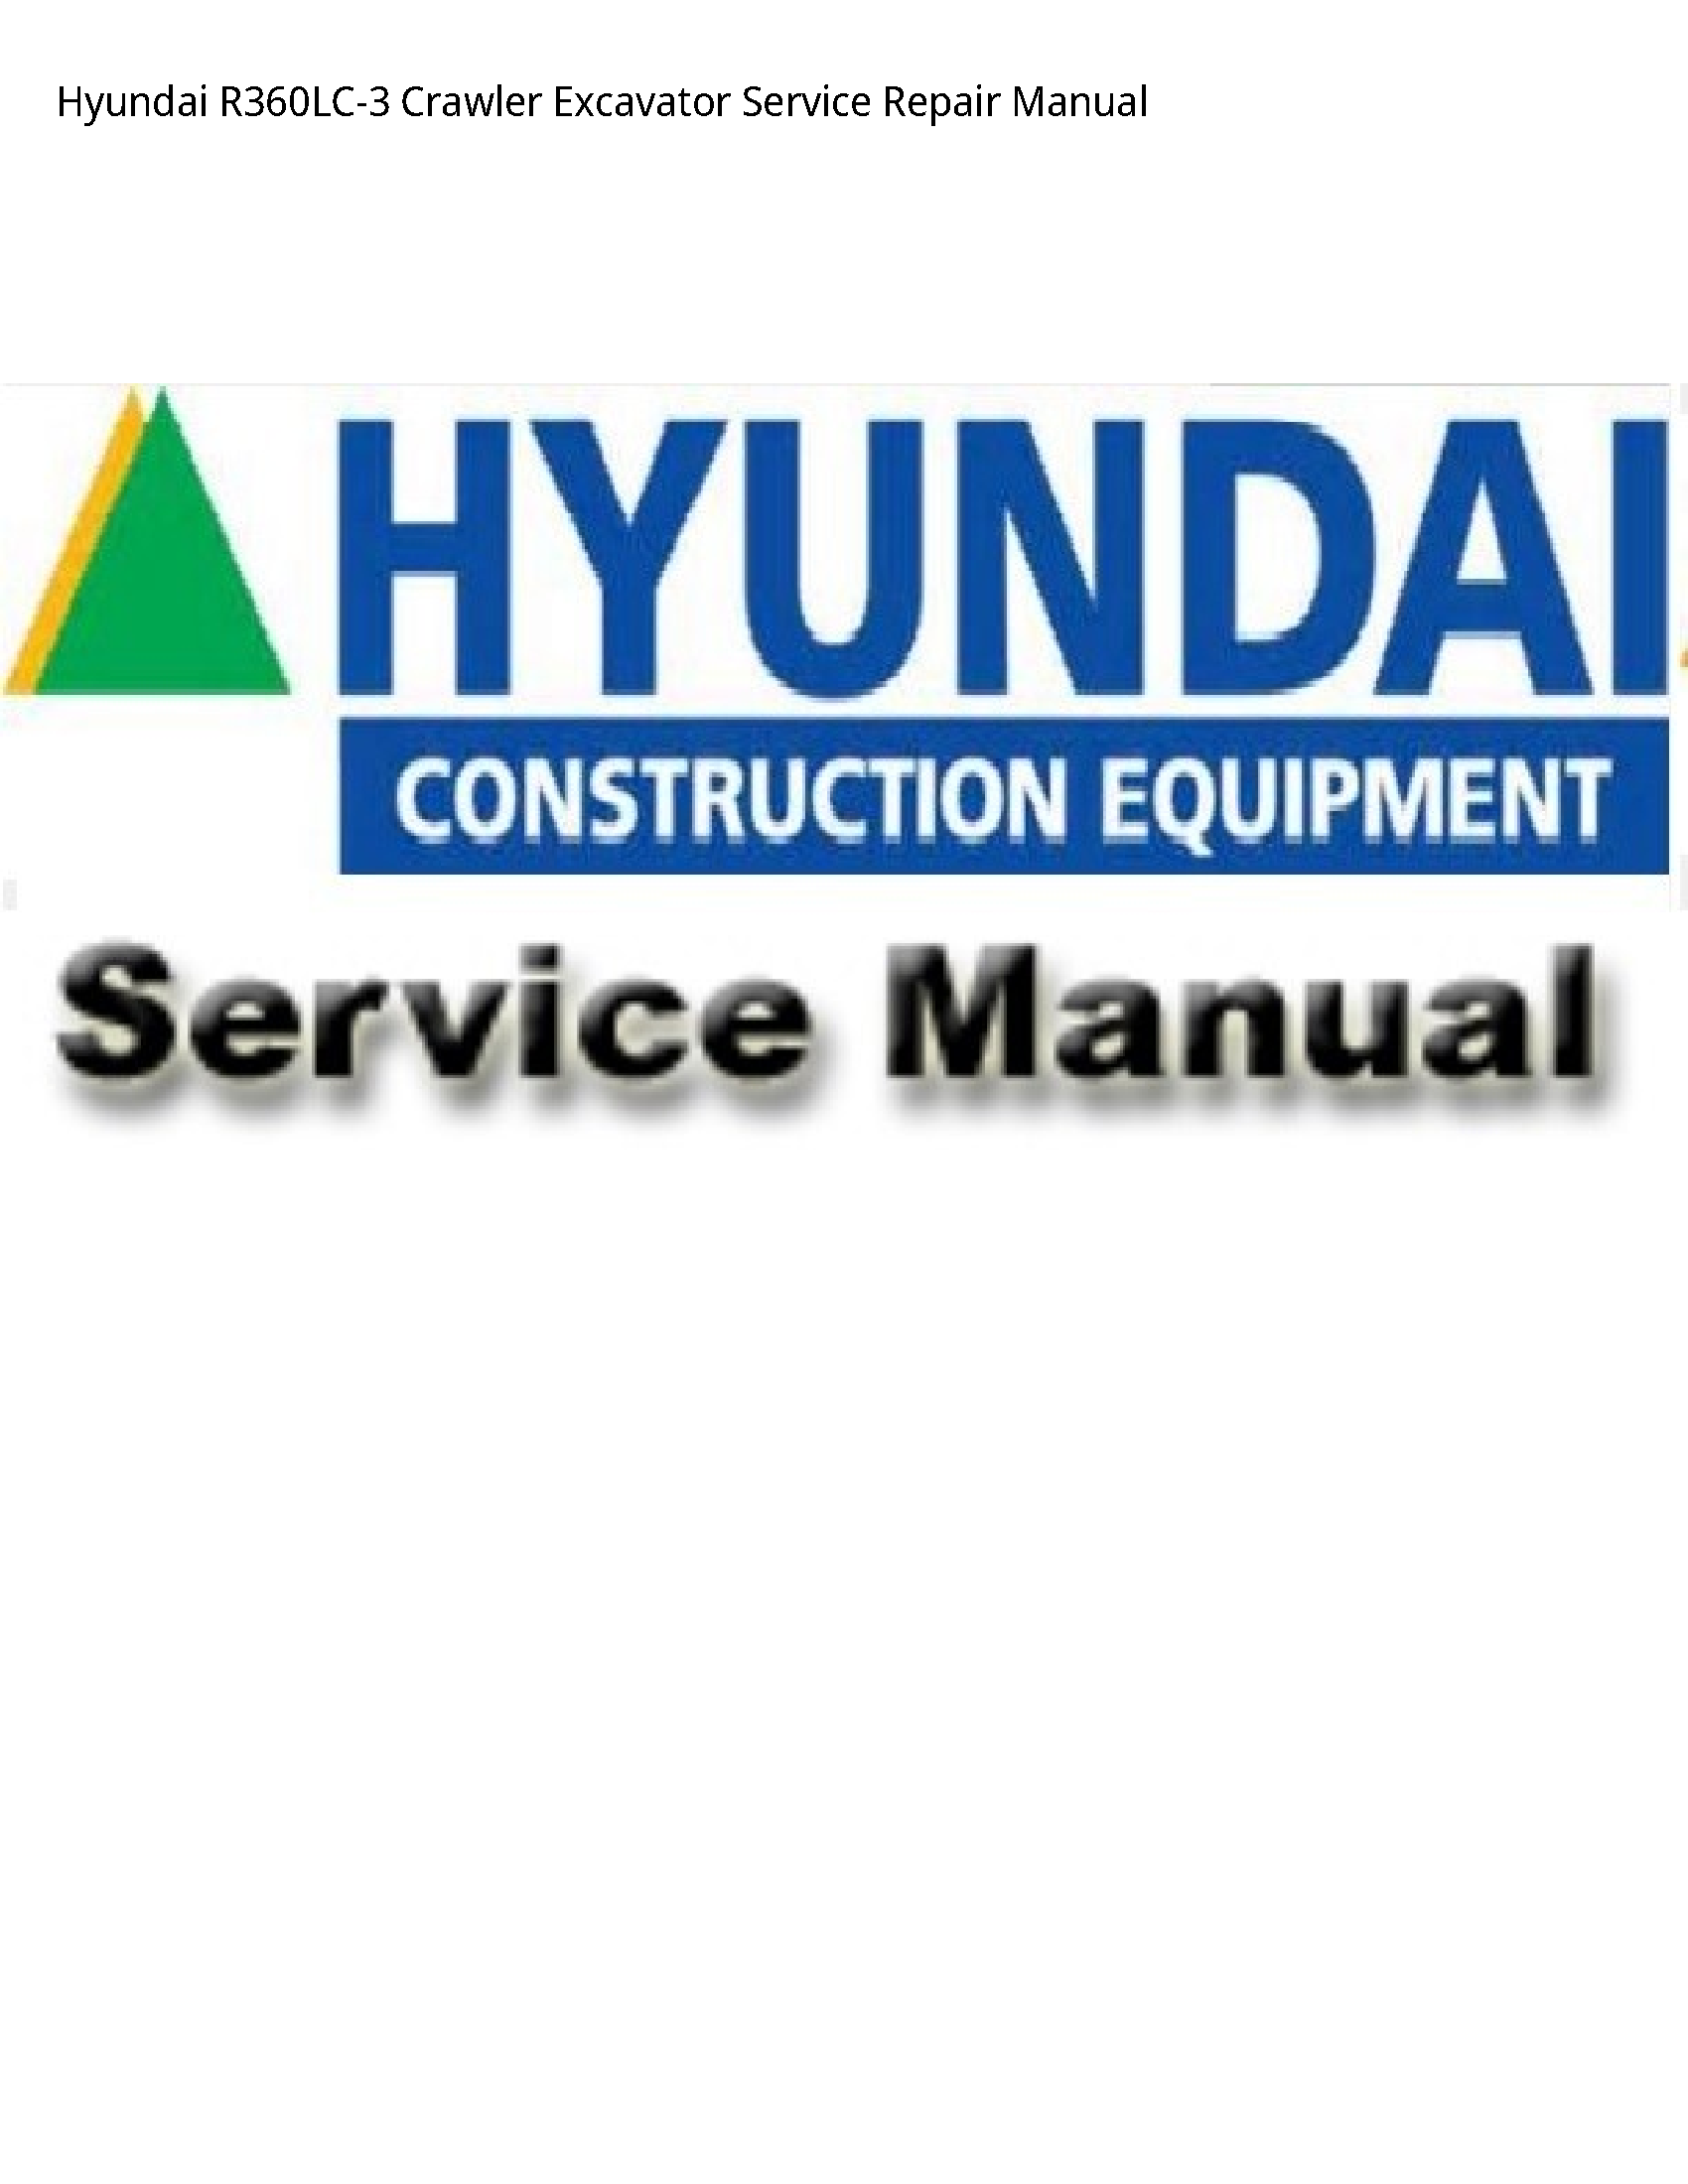 Hyundai R360LC-3 Crawler Excavator manual